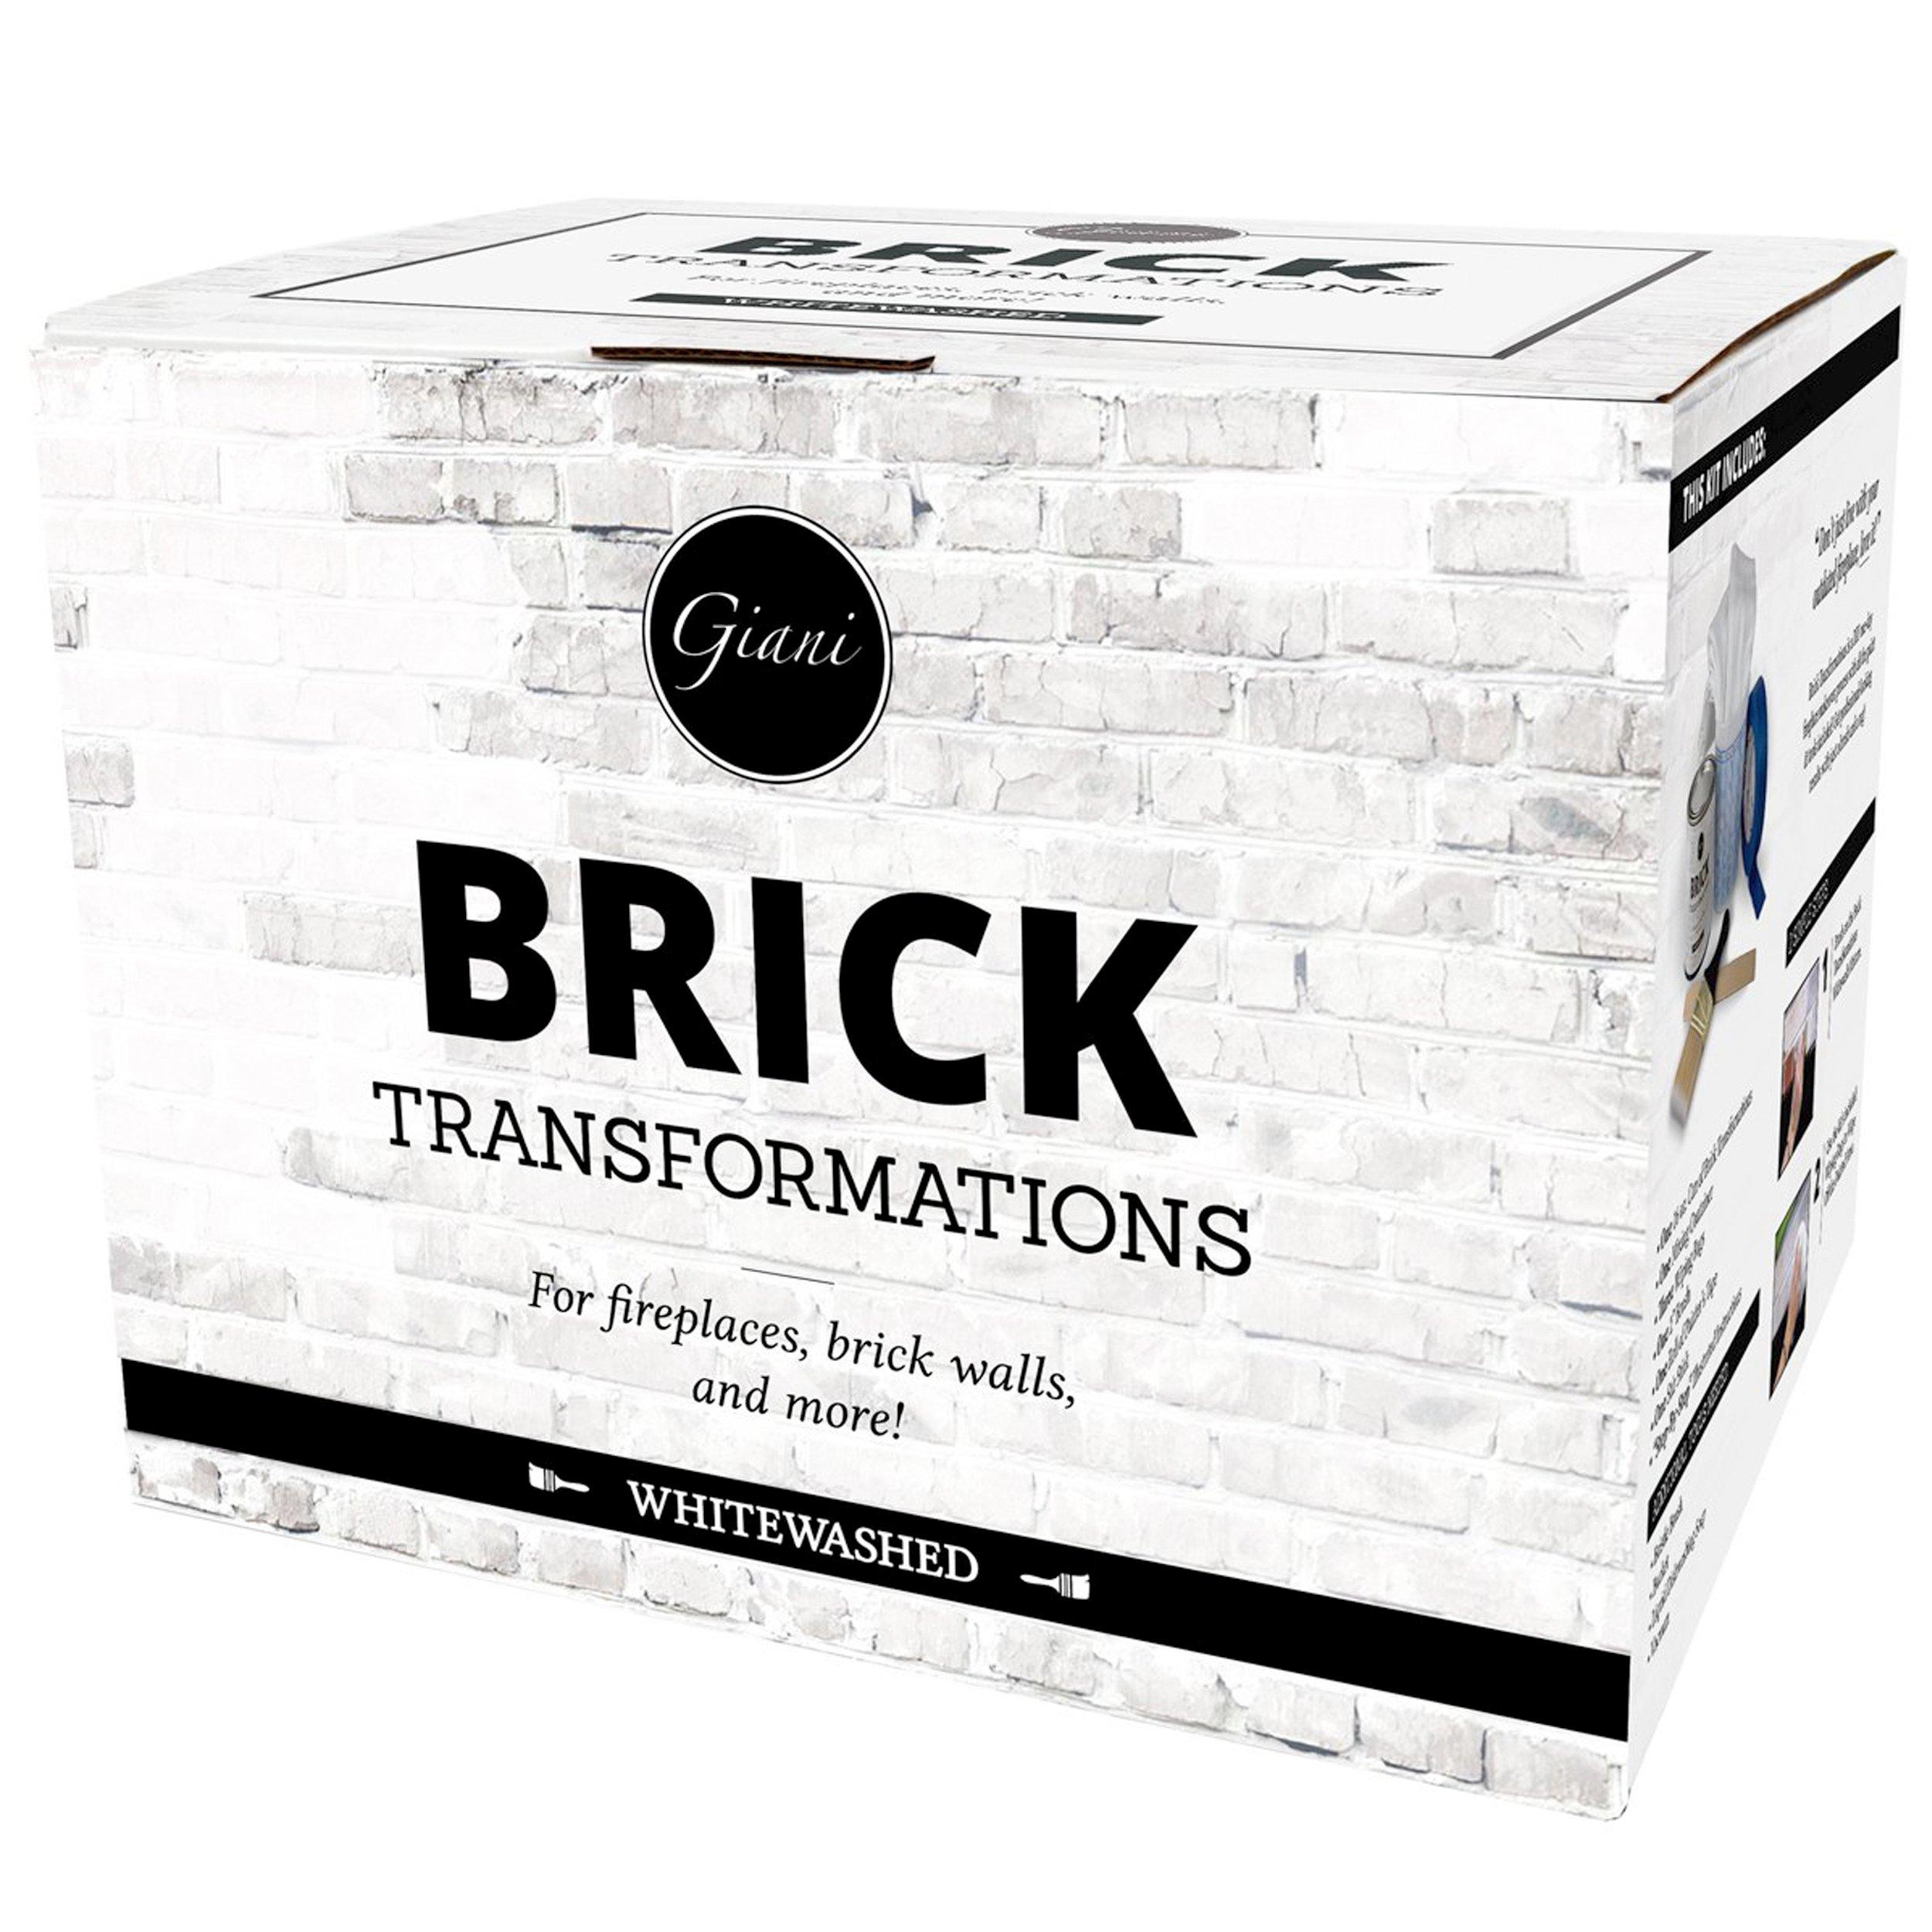 Brick Transformations Whitewashed